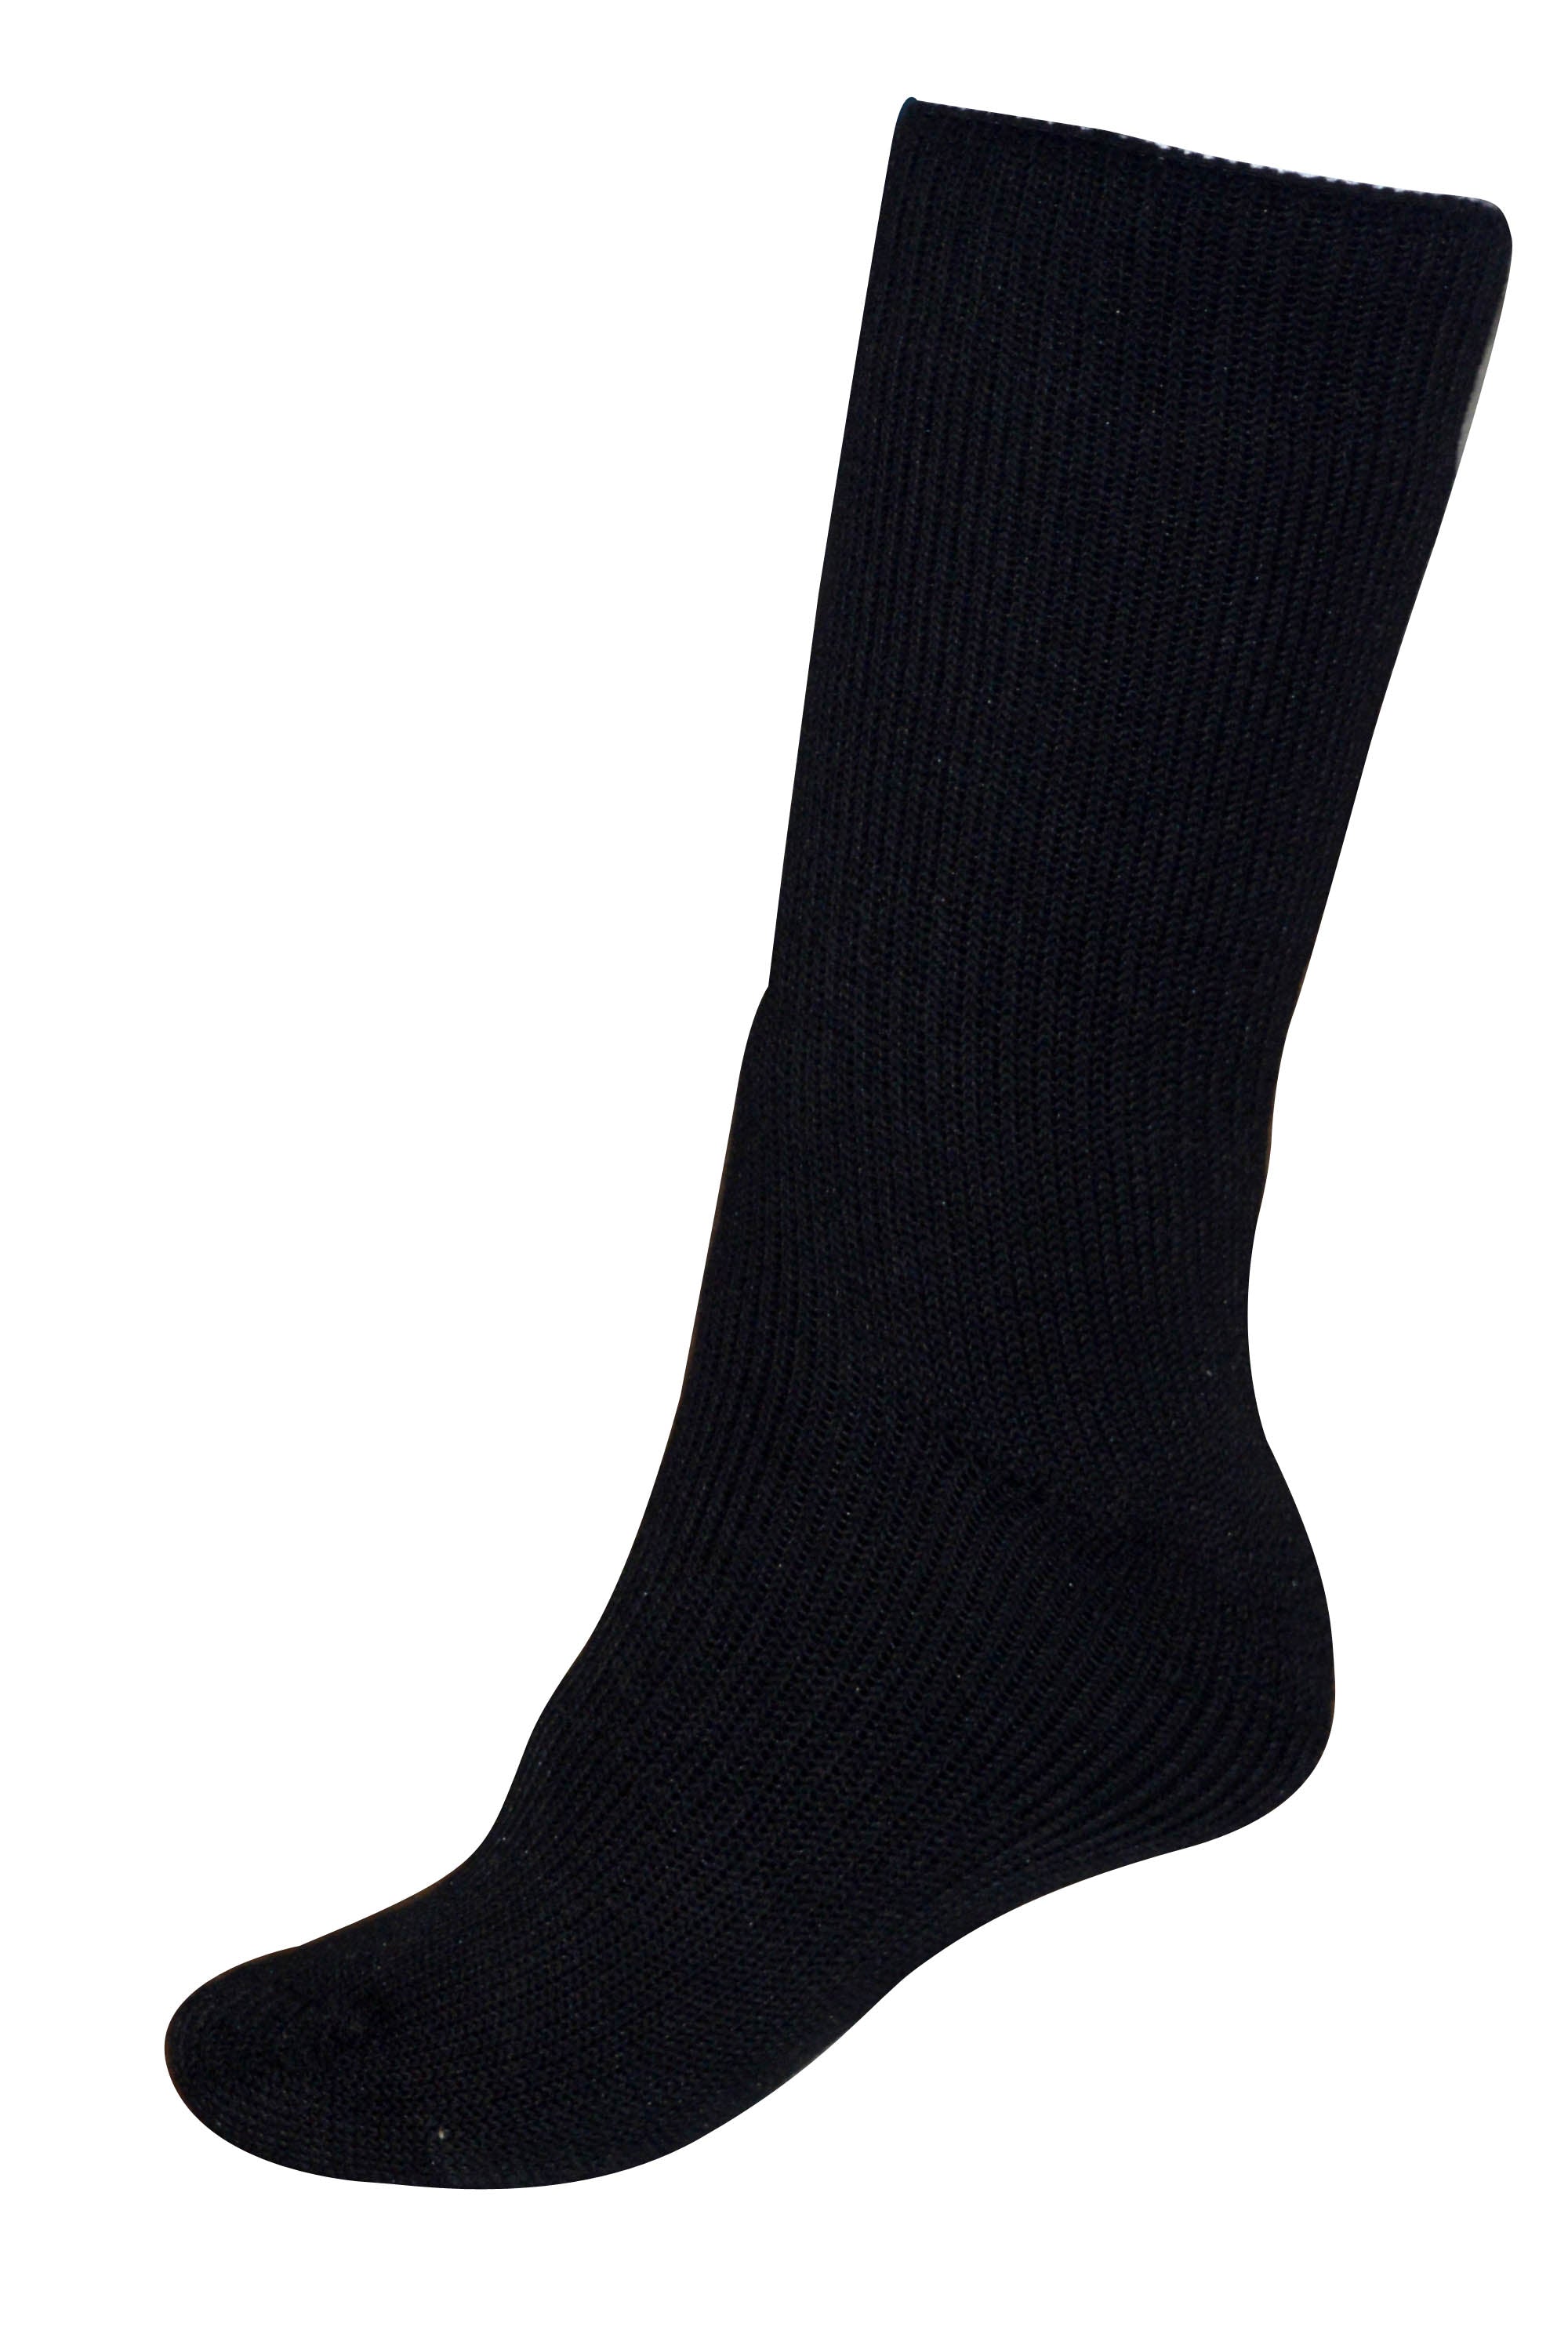 Octave® Kids Extra Warm Thermal Socks 2.45 TOG - Black - British Thermals